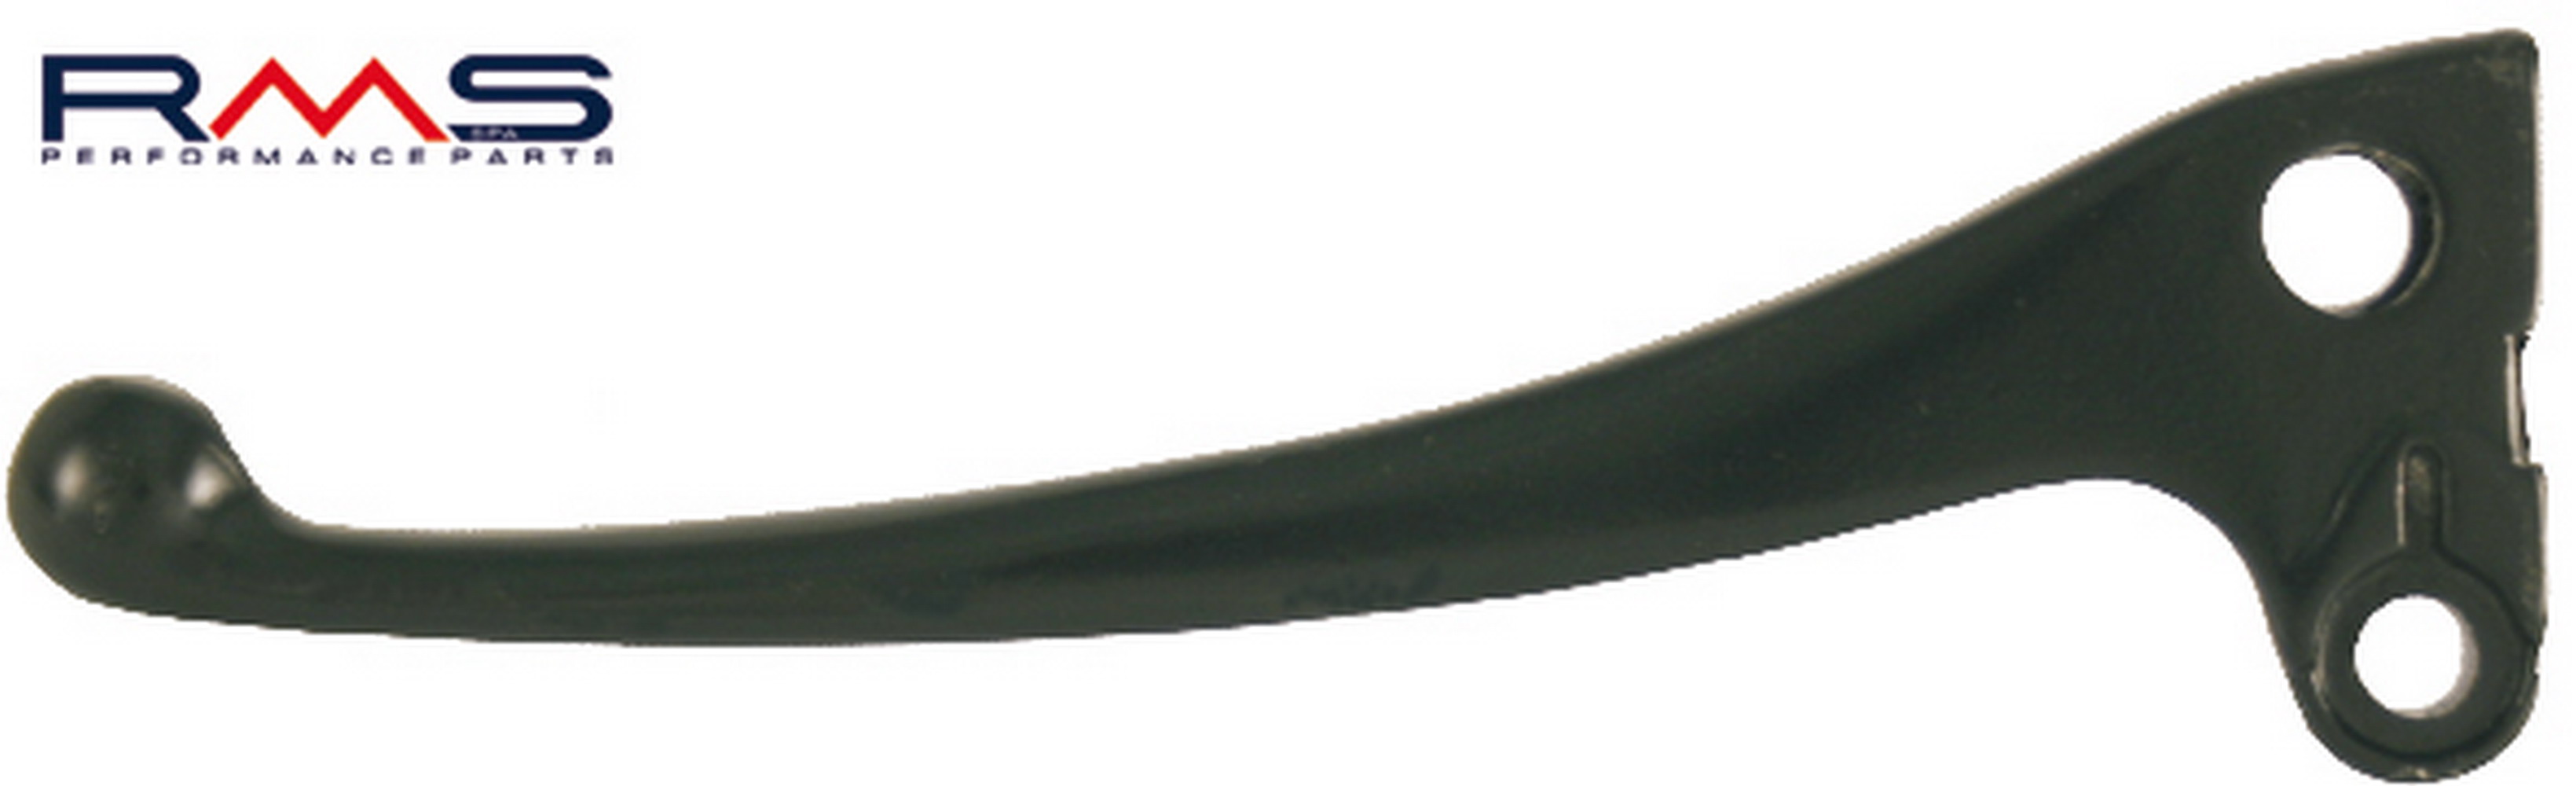 Obrázek produktu Páčka RMS 184100151 levý černý